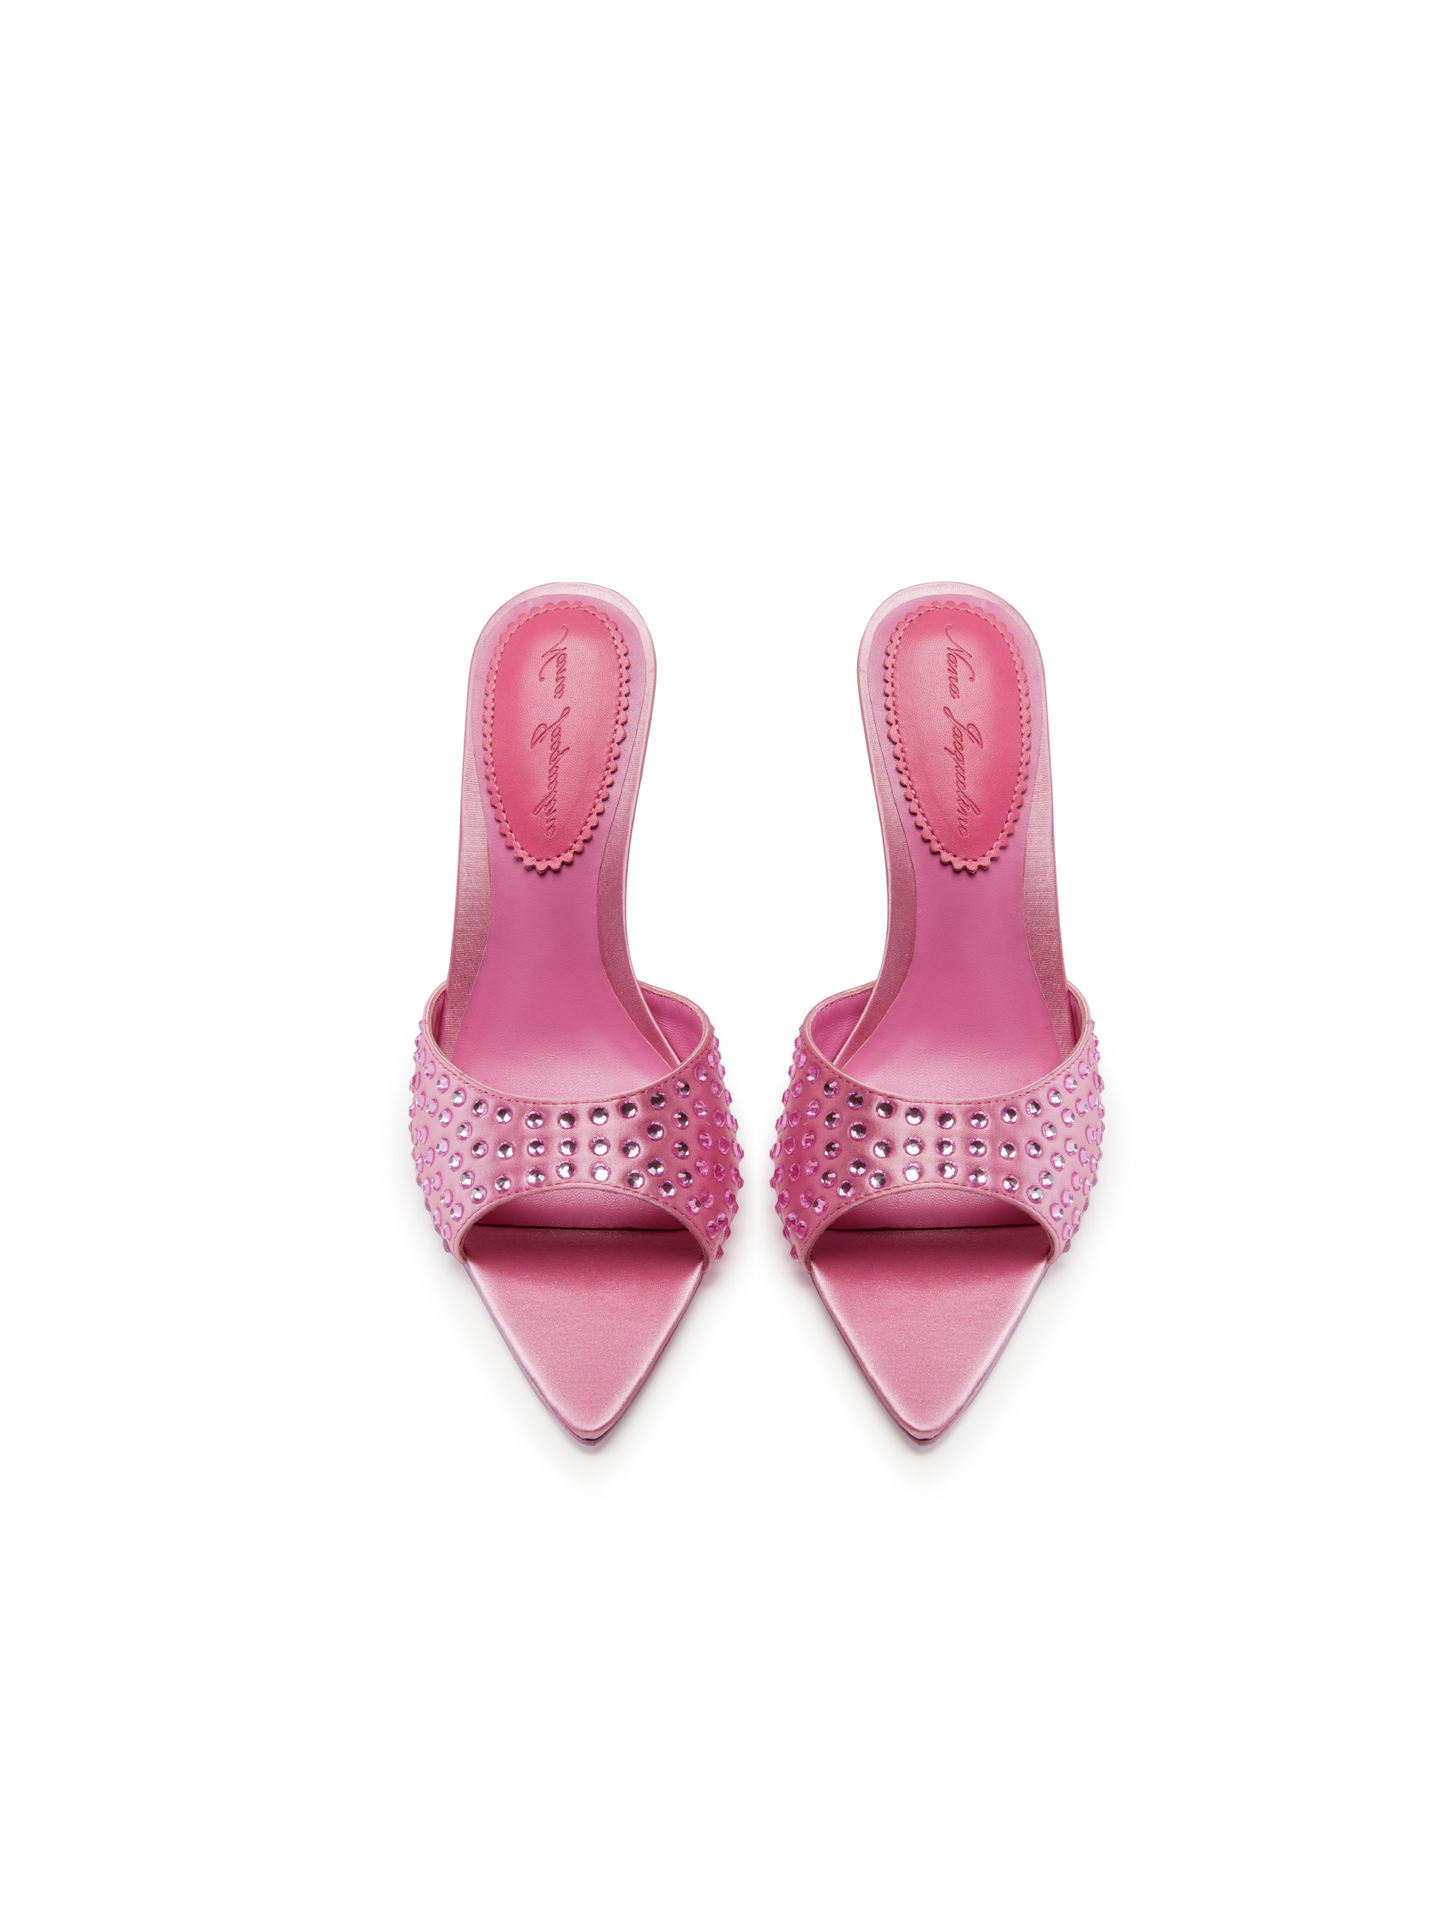 Kate Diamond Heels (Pink) (Final Sale)